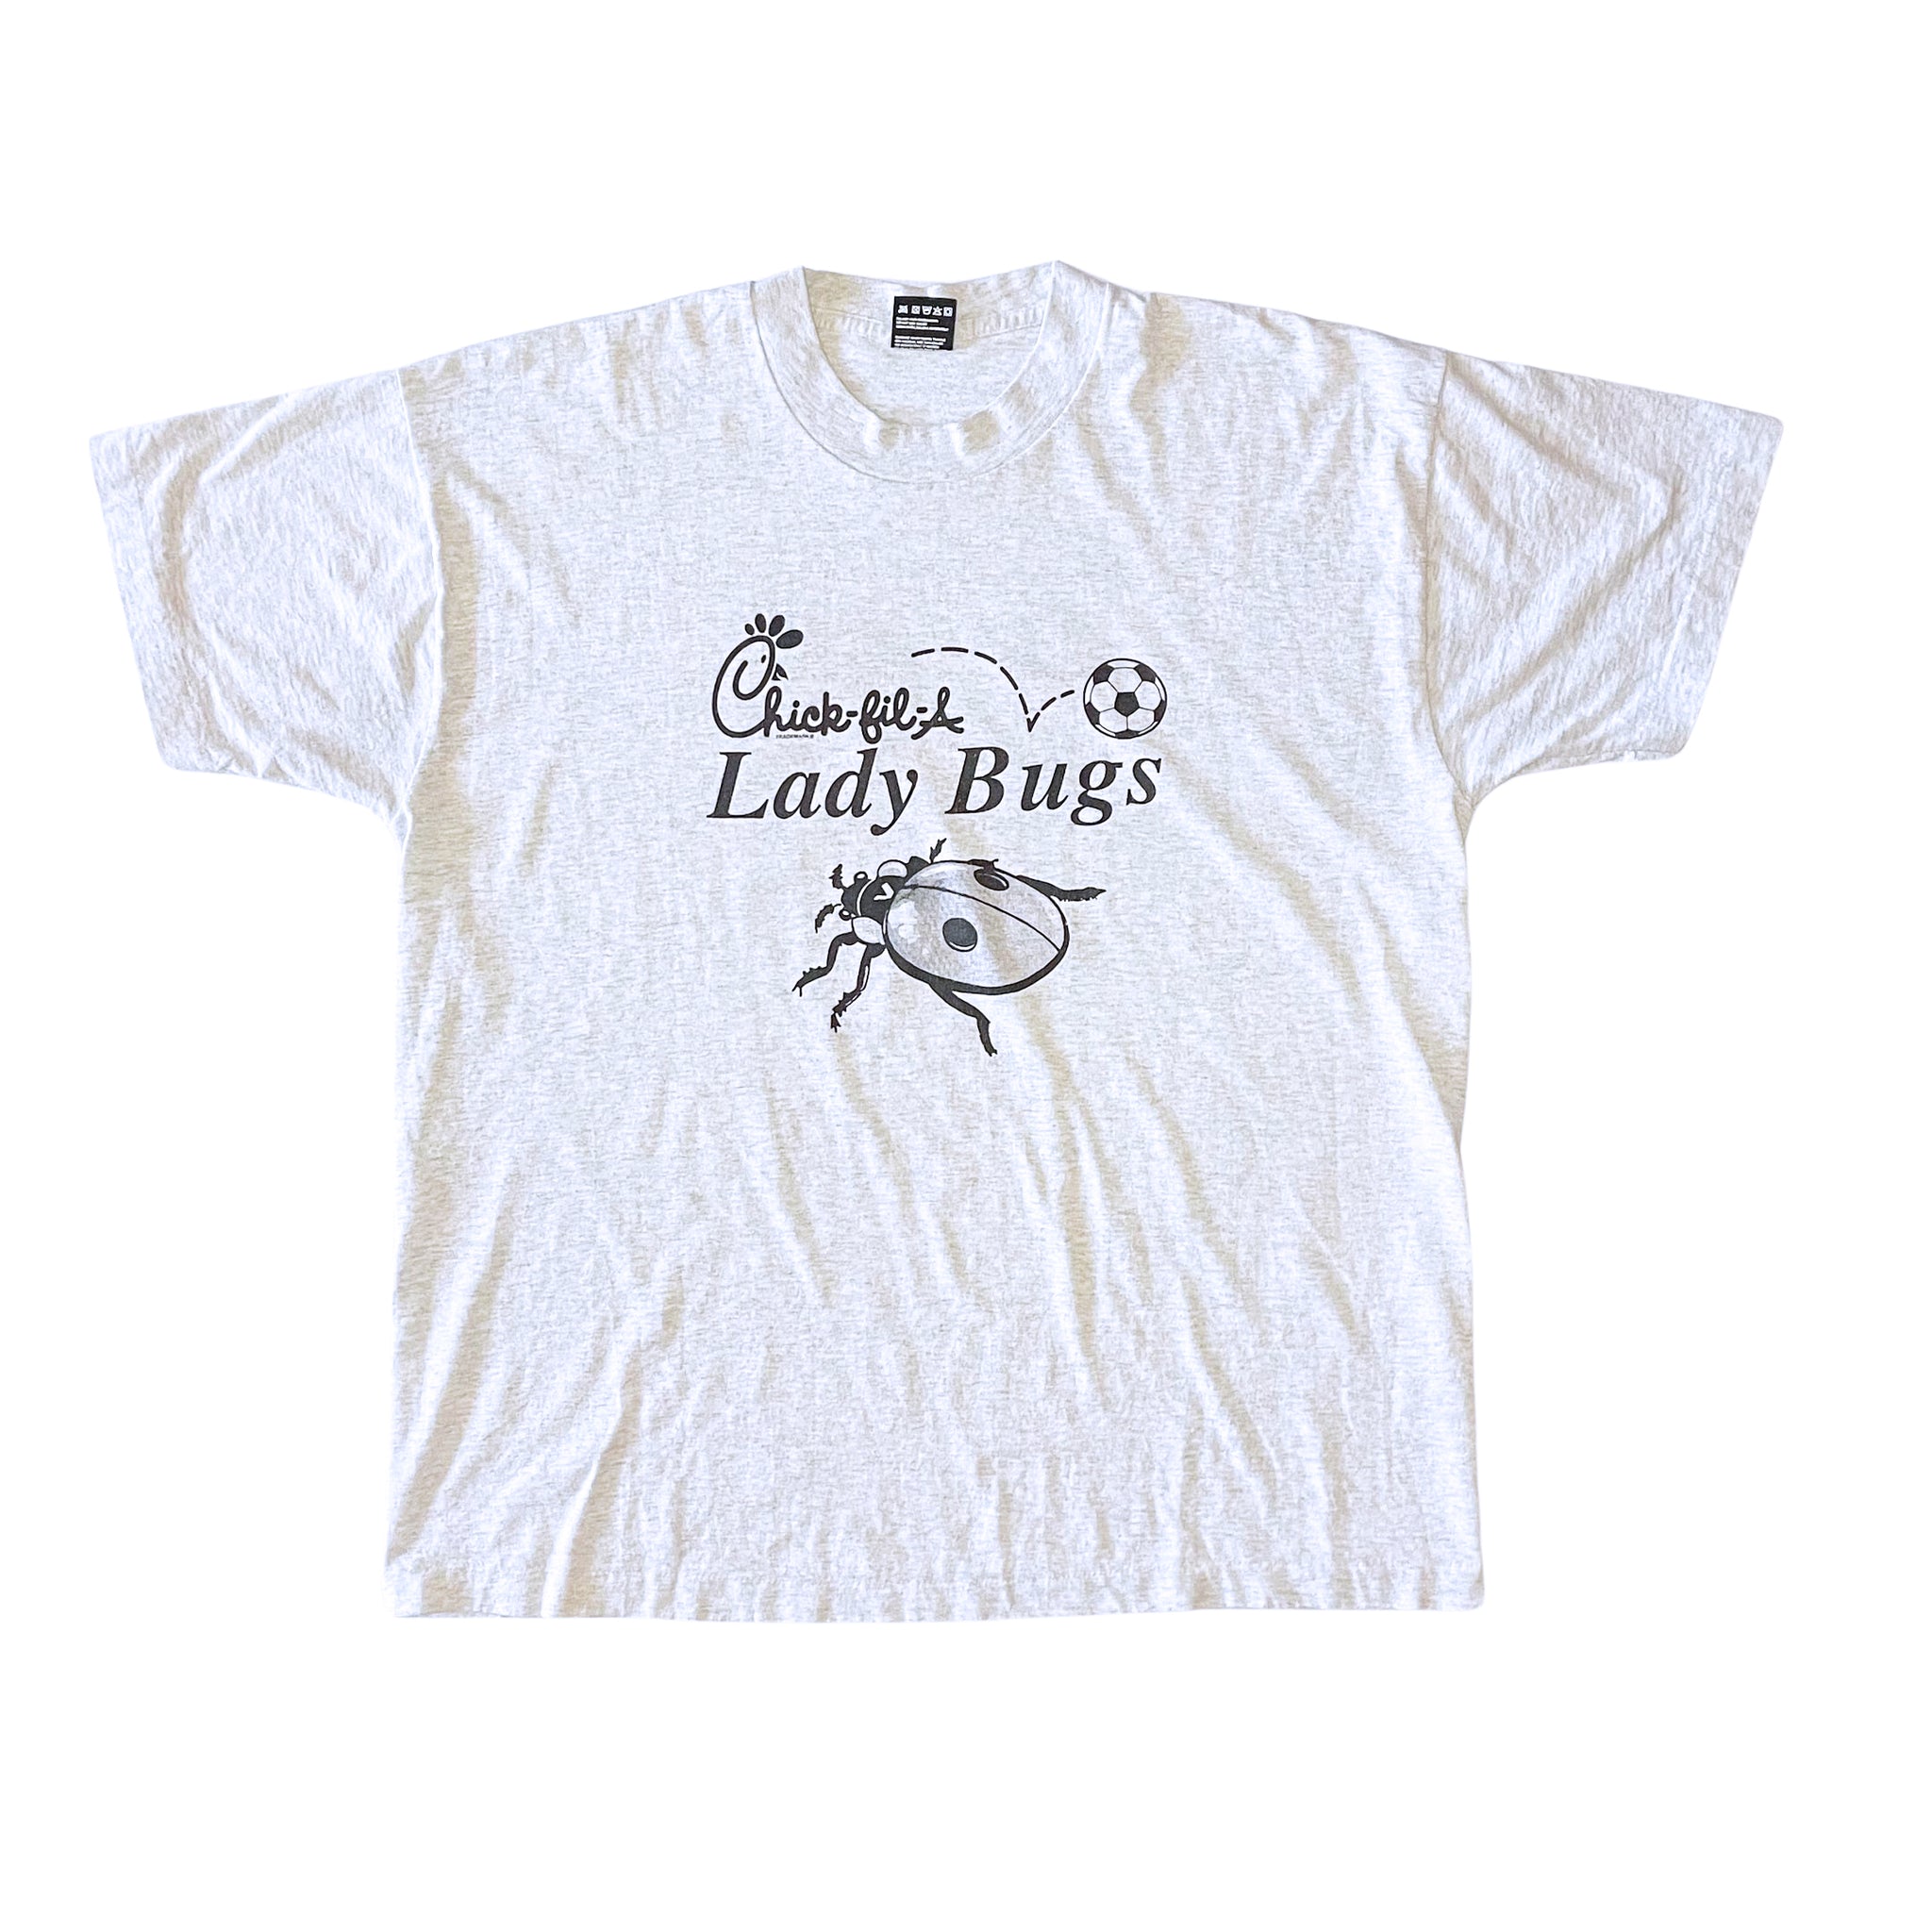 Chik-fil-a Lady Bugs T-Shirt - L